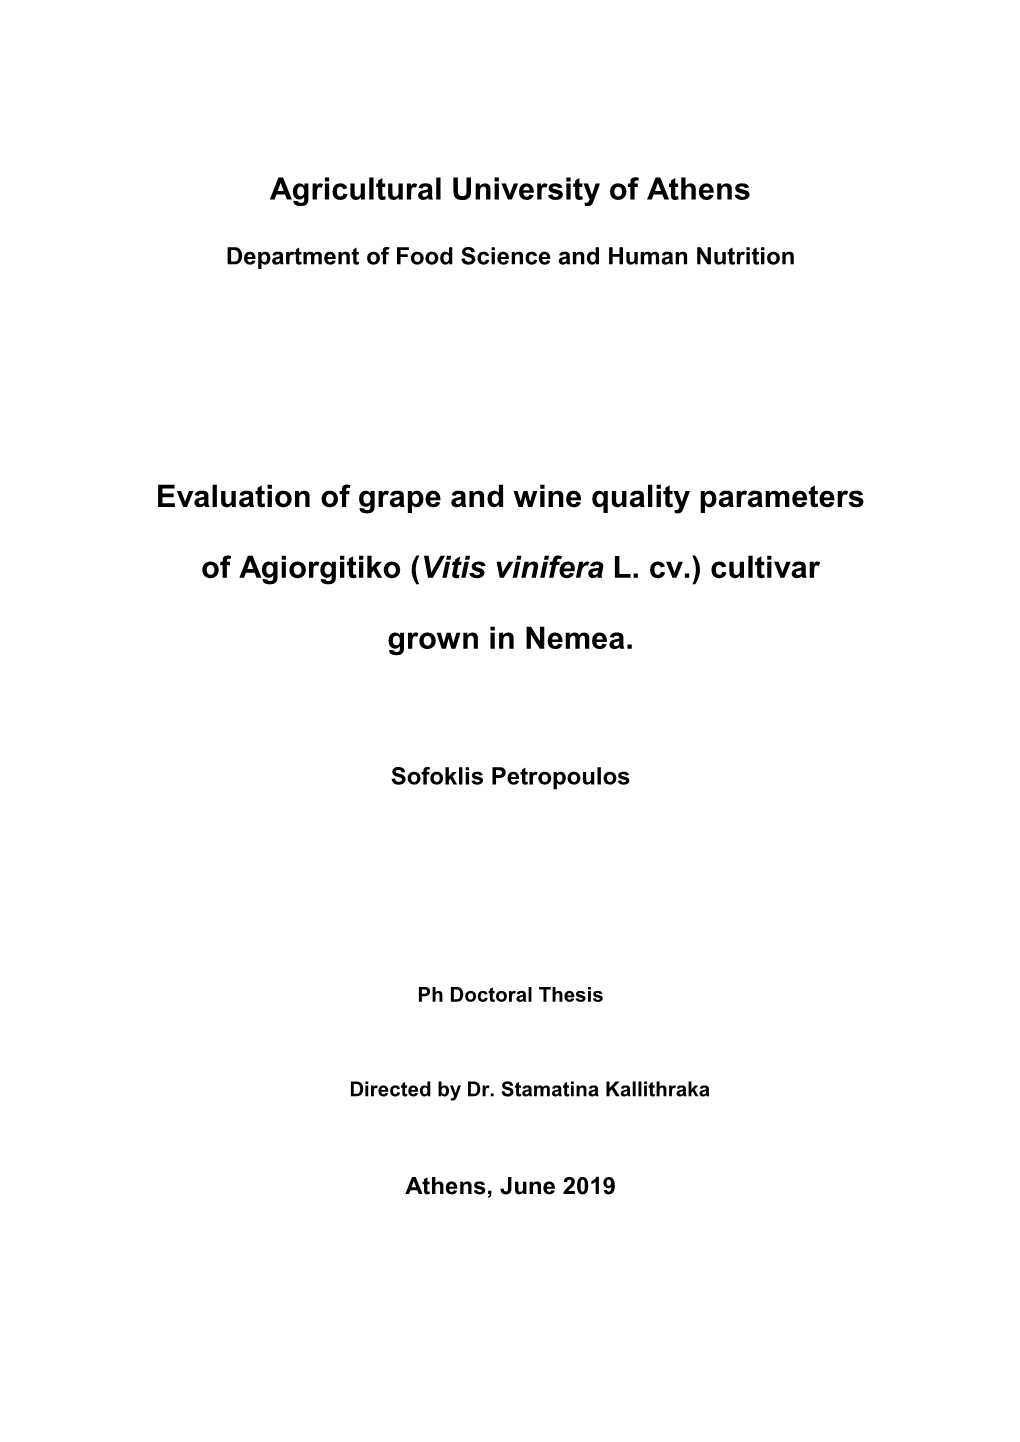 Evaluation of Grape and Wine Quality Parameters of Agiorgitiko